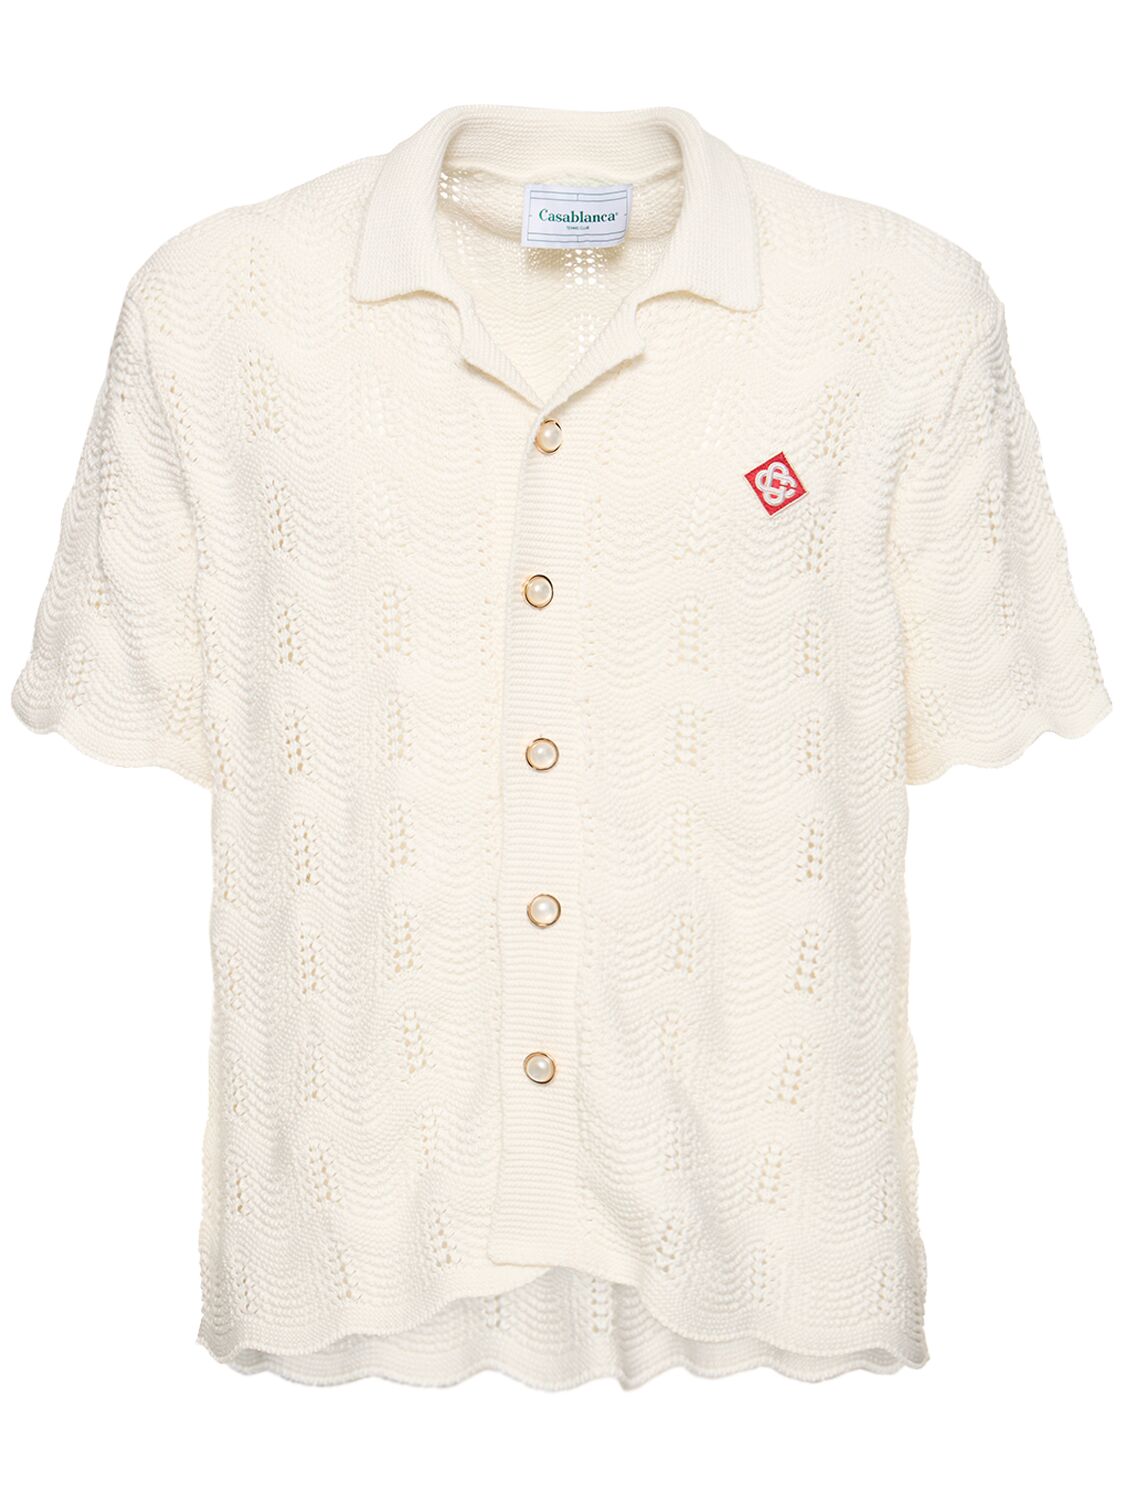 Jacquard Monogram Cotton Terry Shirt